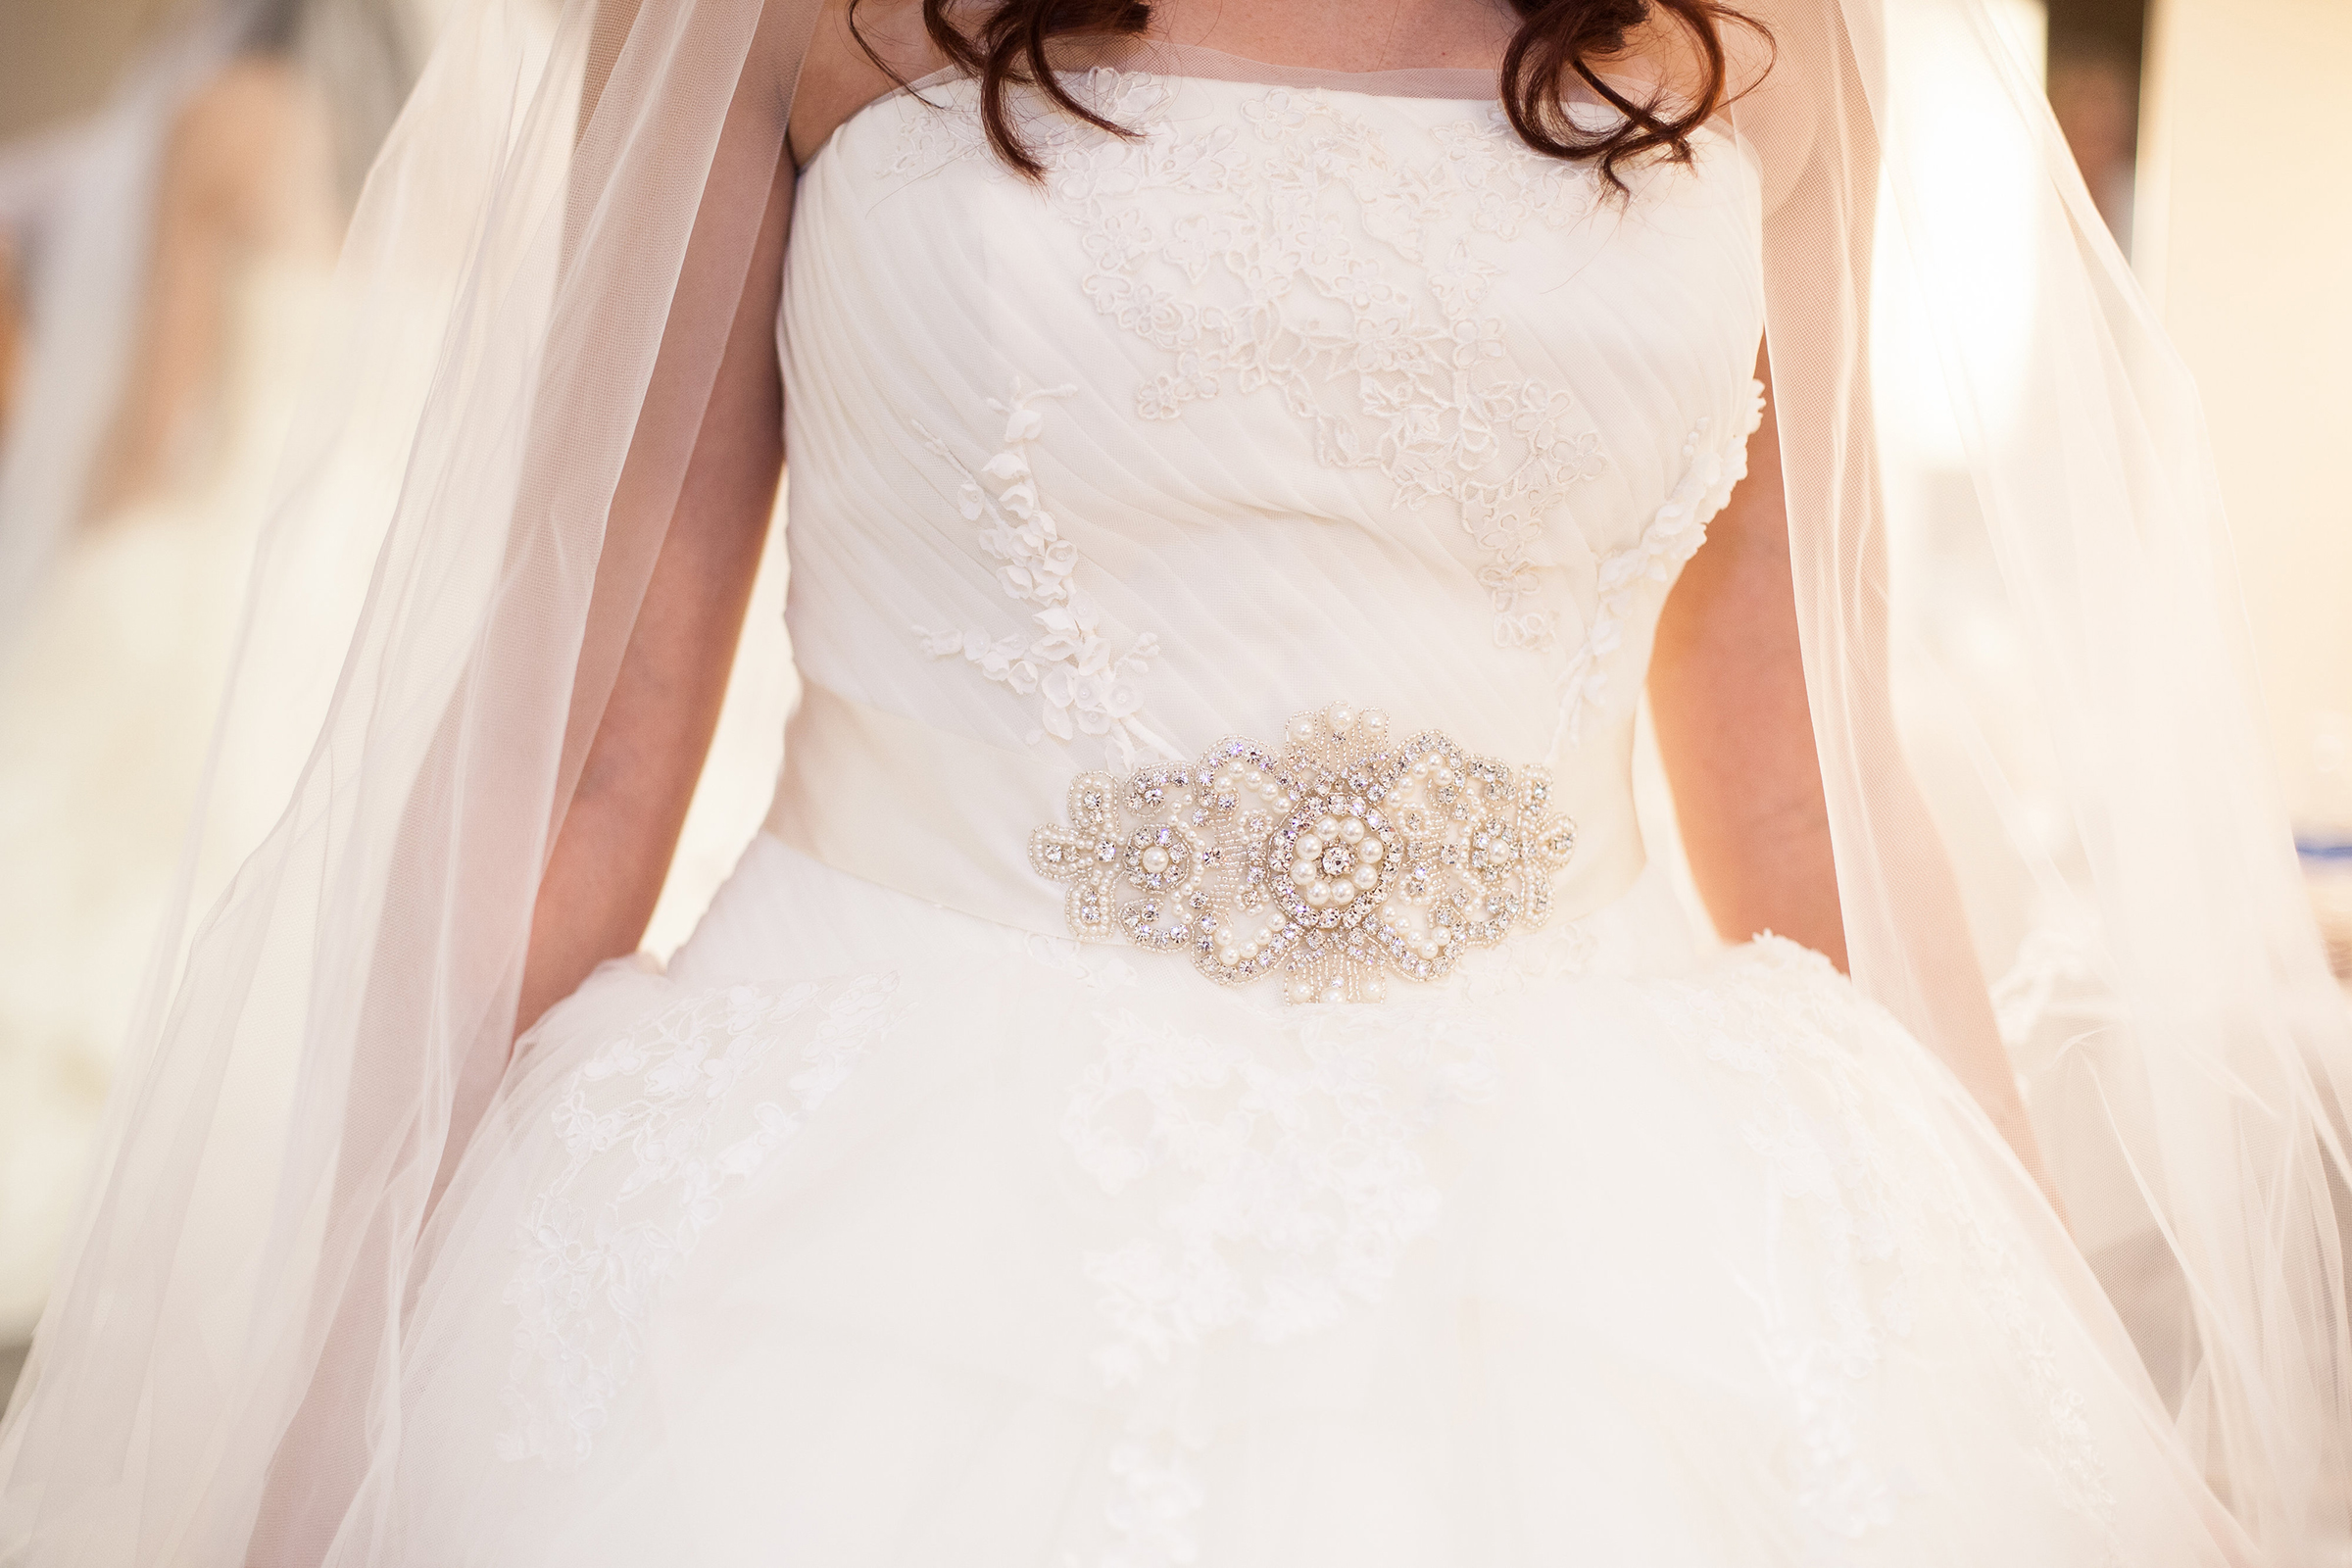 ballgown wedding dress with ornate sash belt